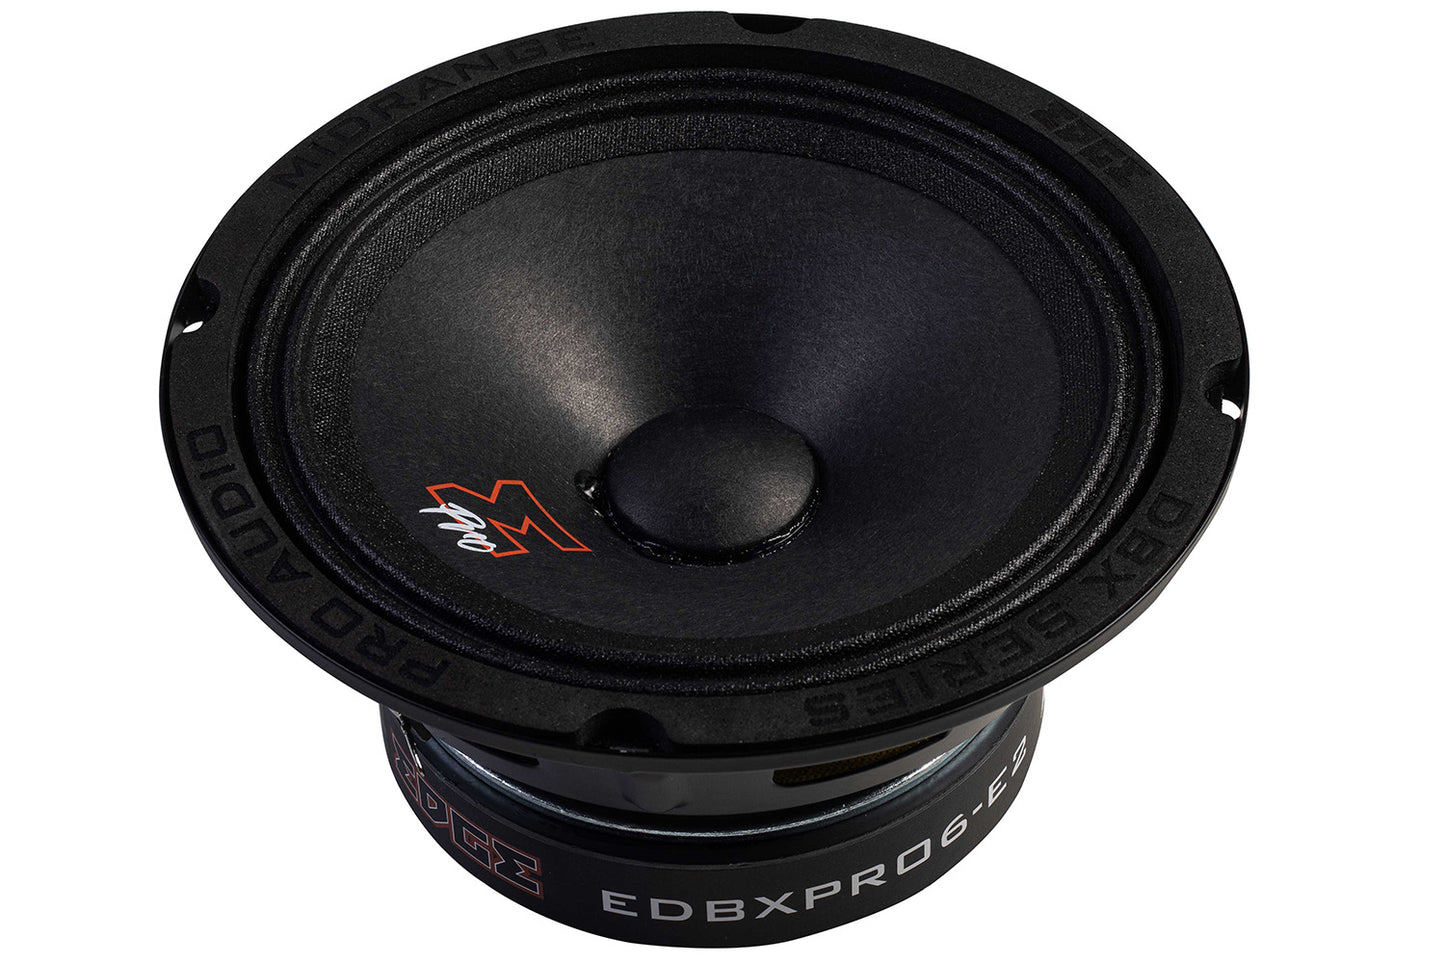 EDBXPRO6-E2 | EDGE DBX Series 6.5 inch 300 watts Pro Audio Midrange Speakers - Pair